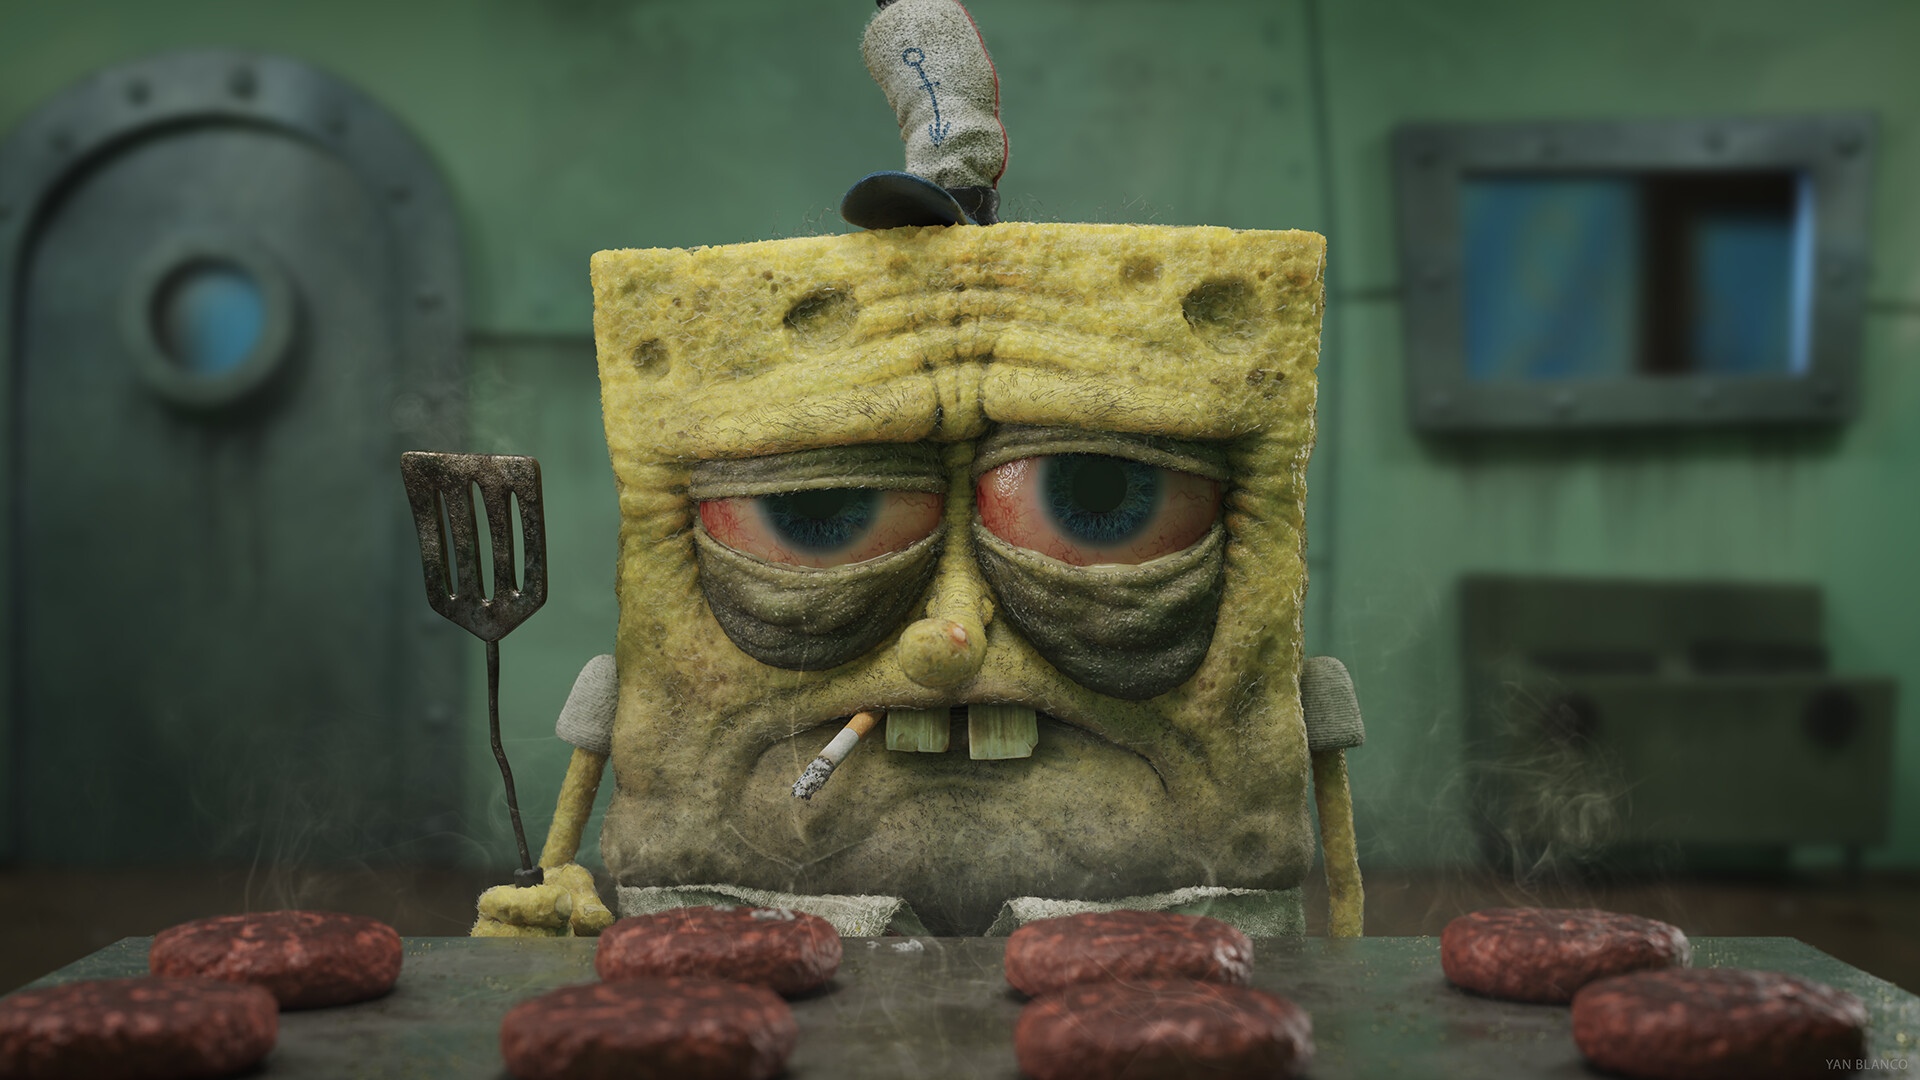 spongebob squarepants, tv show, hamburger, smoking